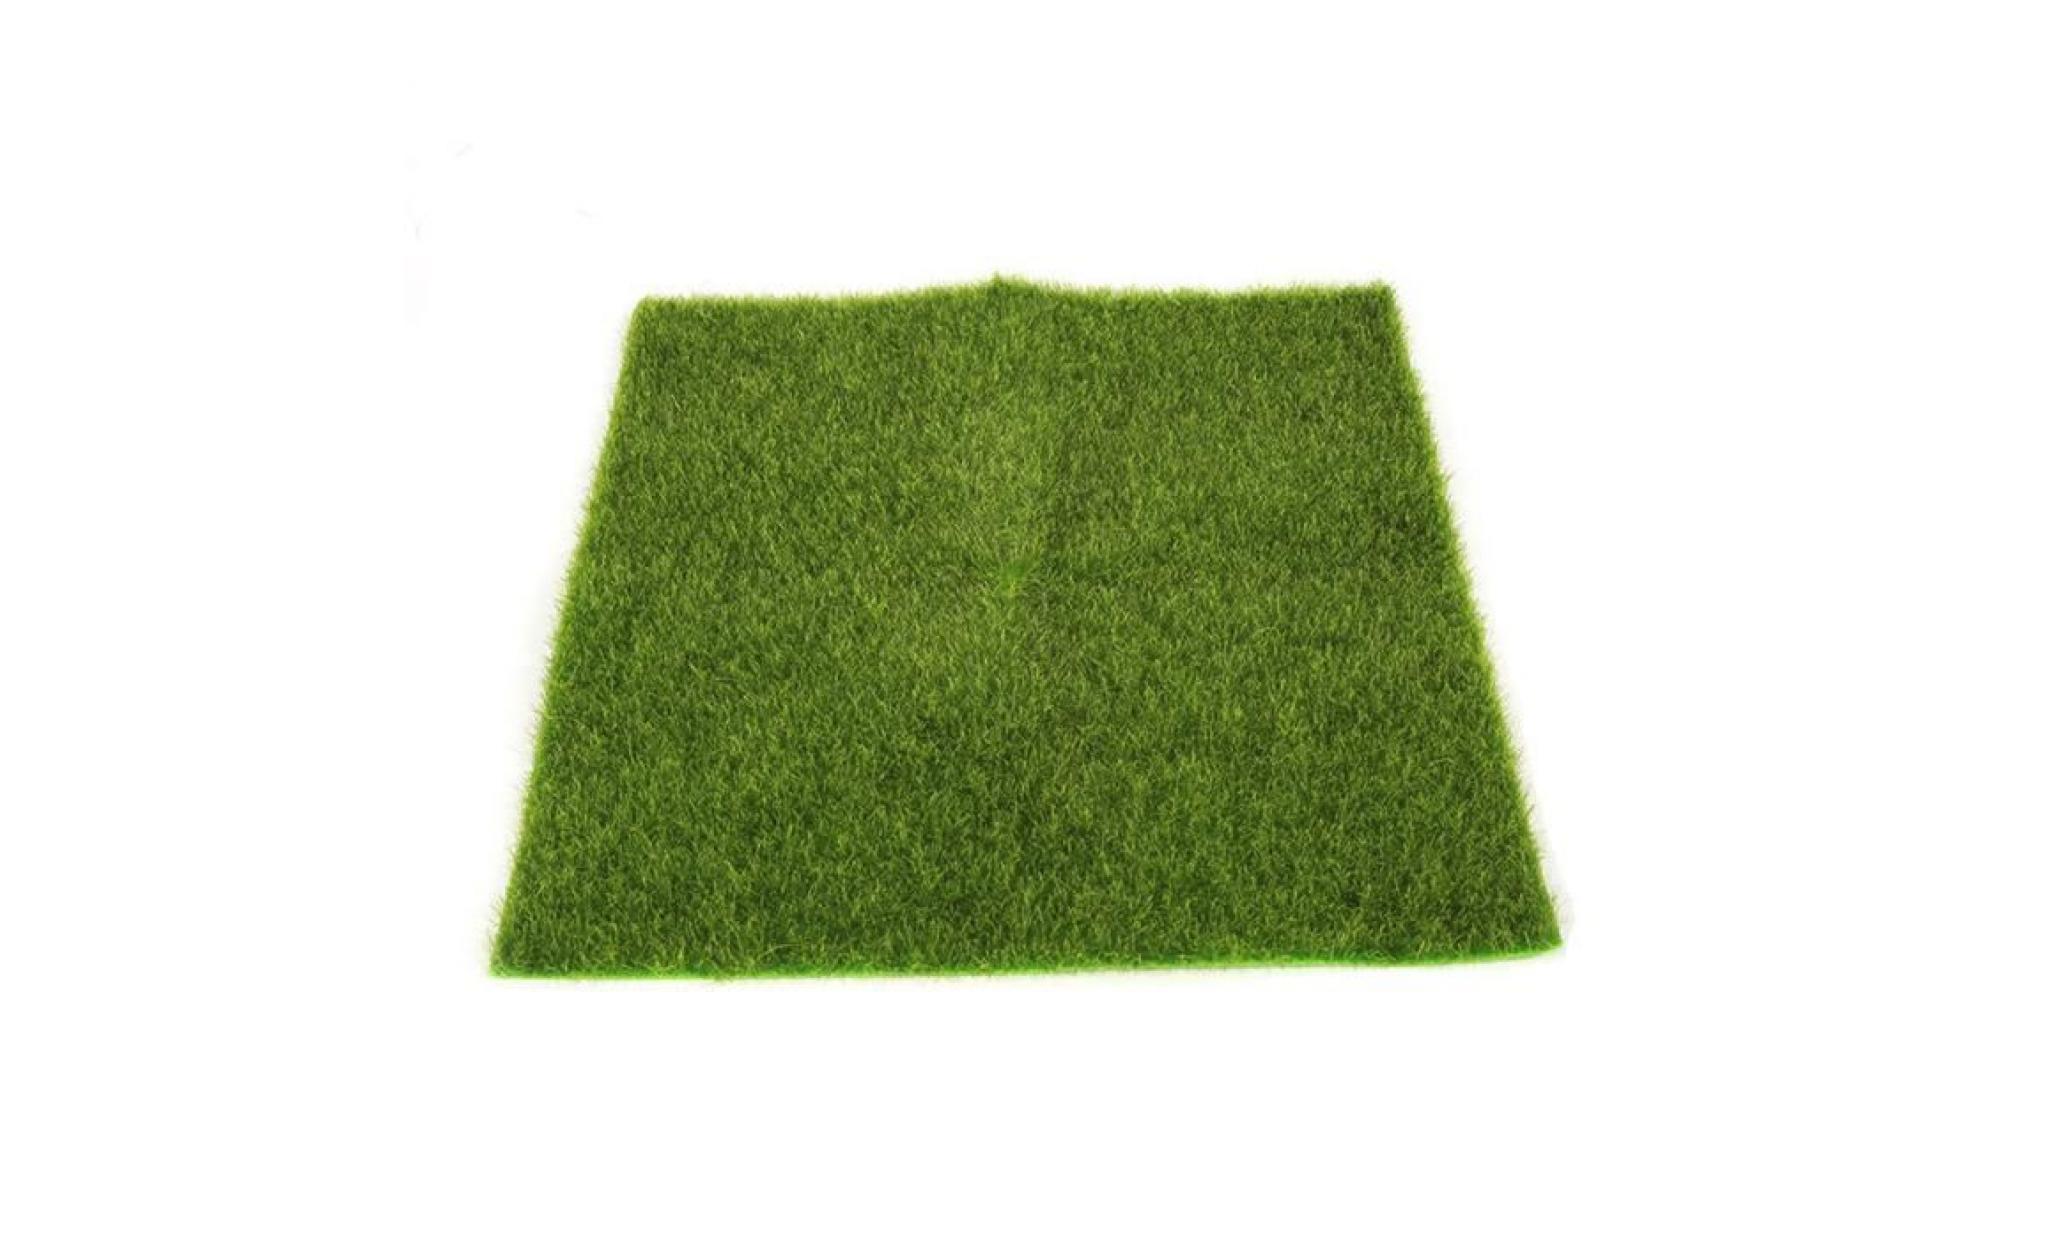 gazon artificiel faux jardin herbe pelouse moss craft miniature dollhouse décor fyu6667 pas cher